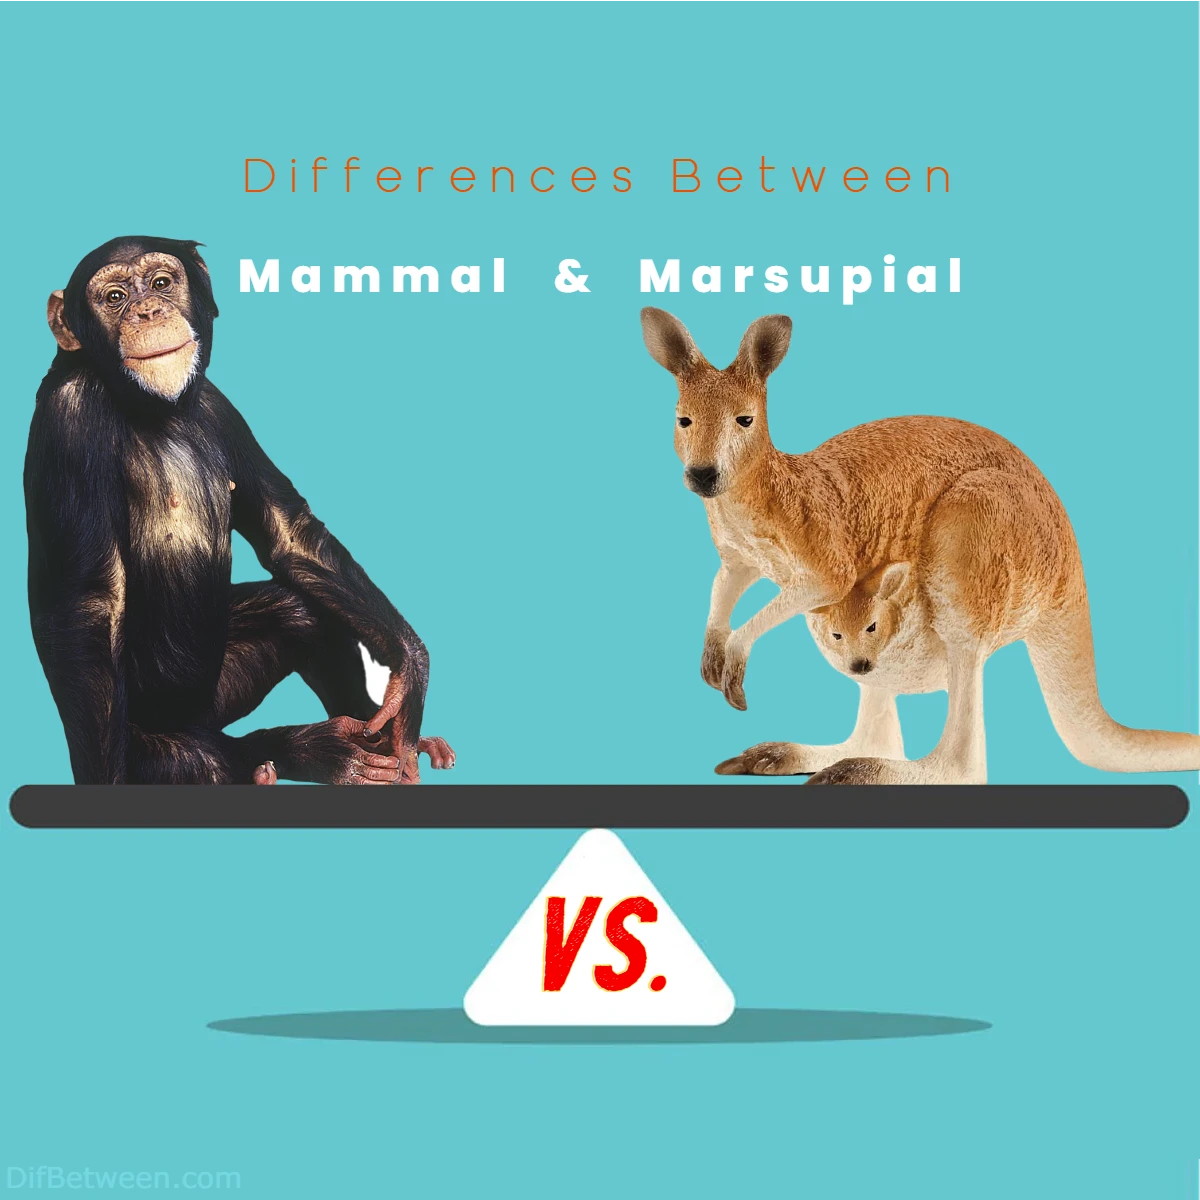 Differences Between Mammal vs Marsupial